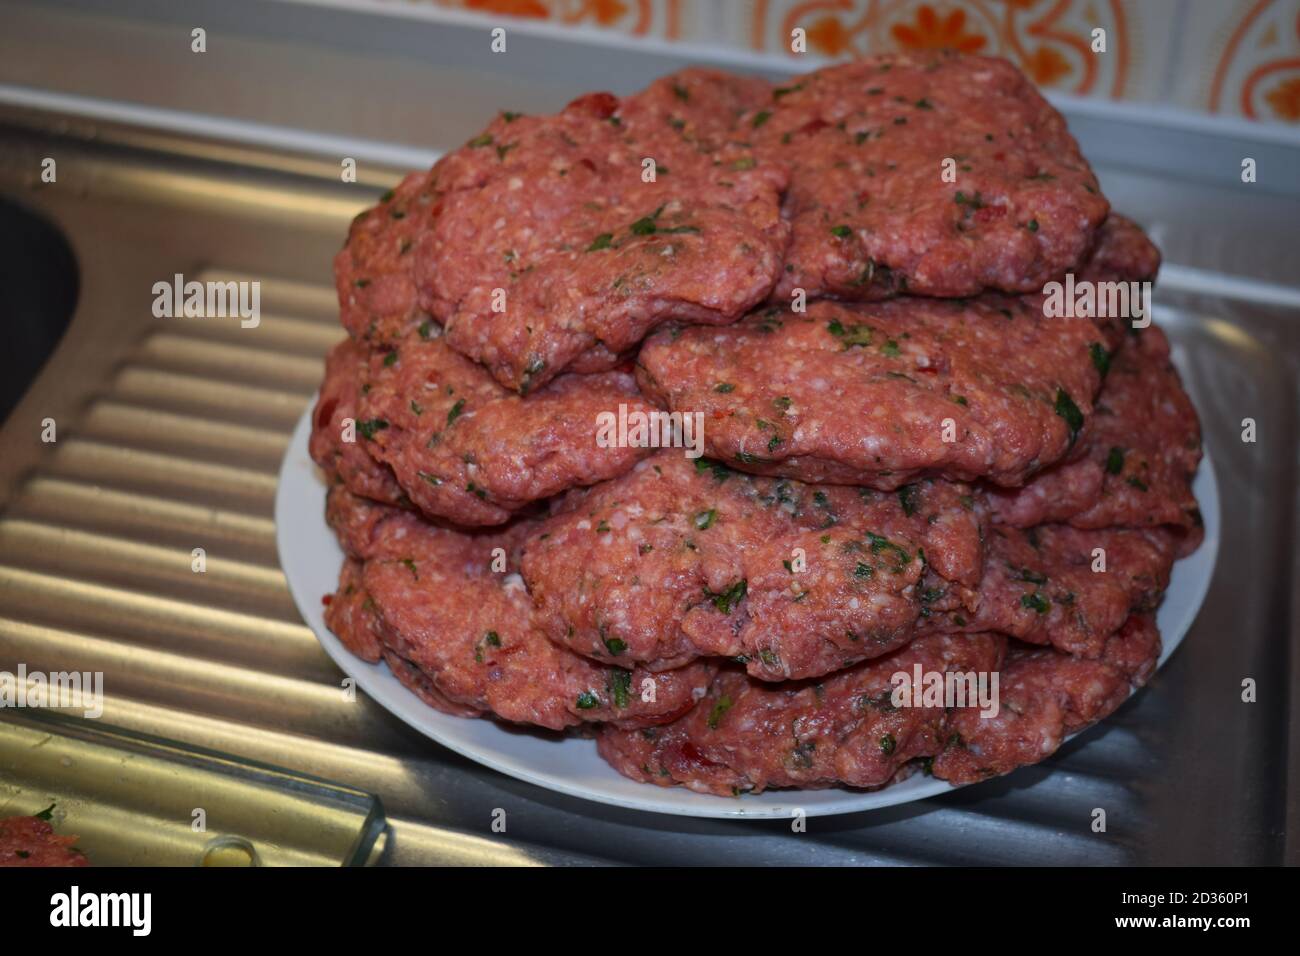 homemade burger Stock Photo